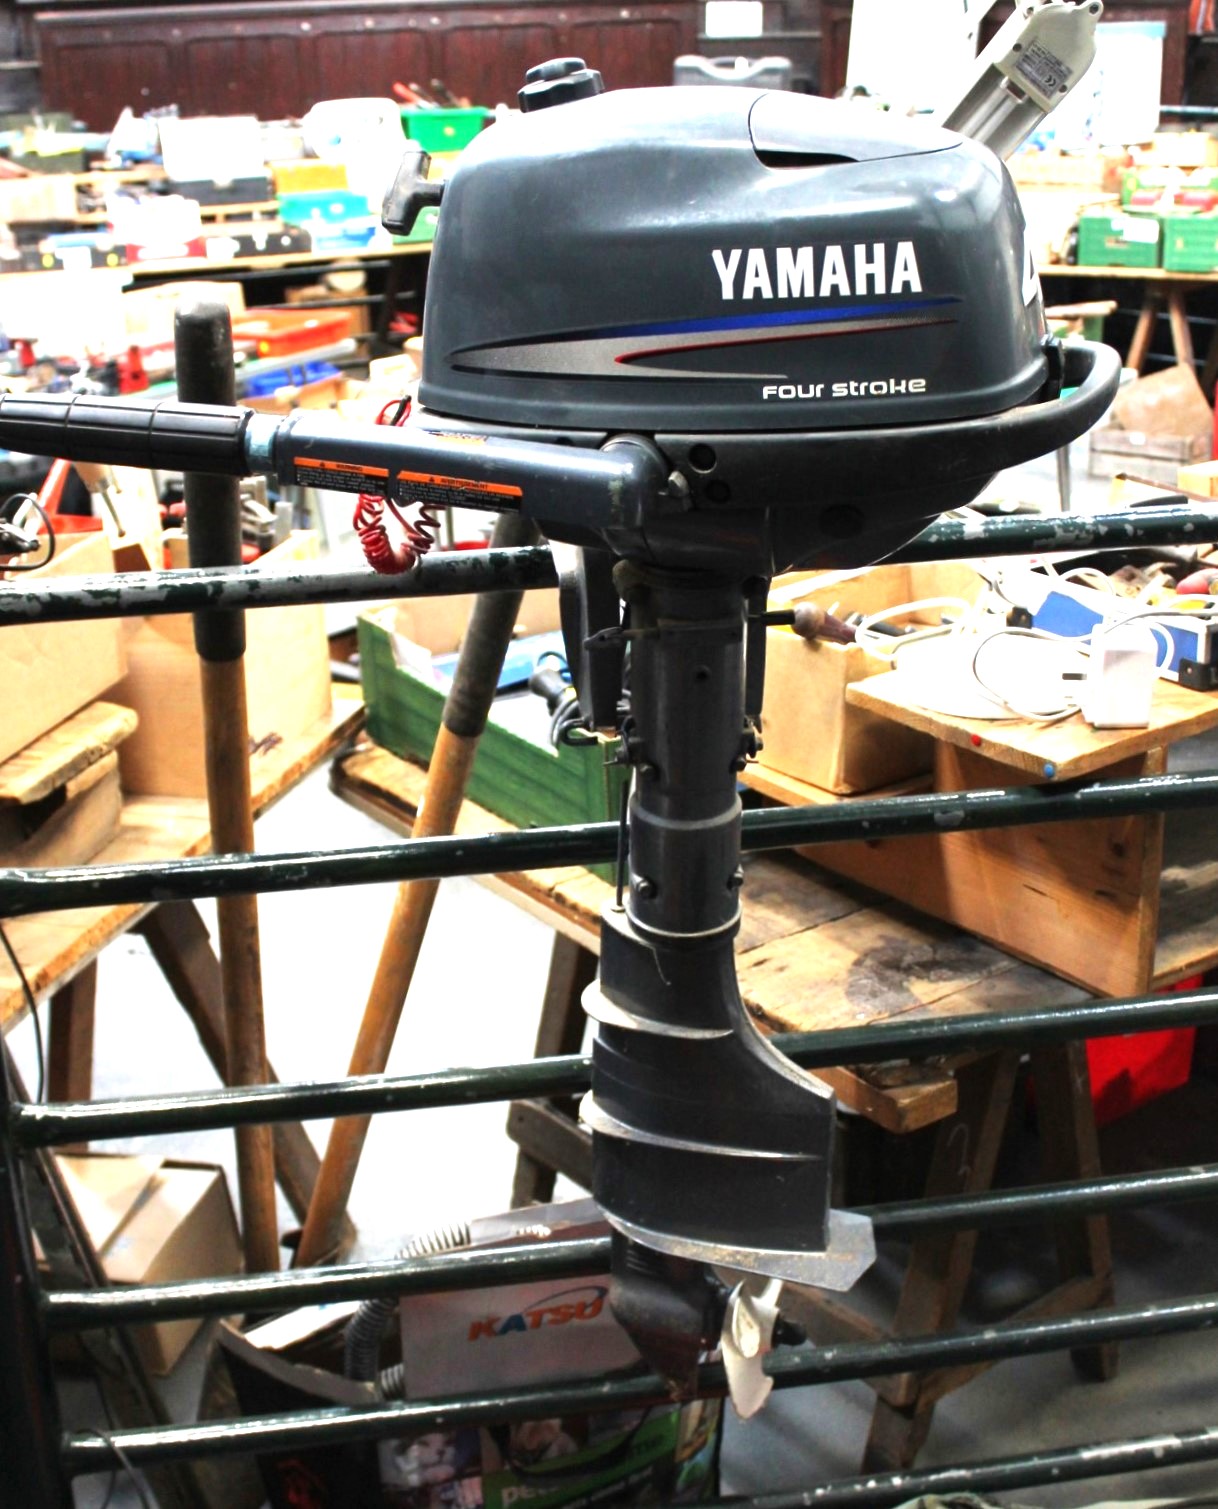 Yamaha No. 4 four stroke outboard motor,